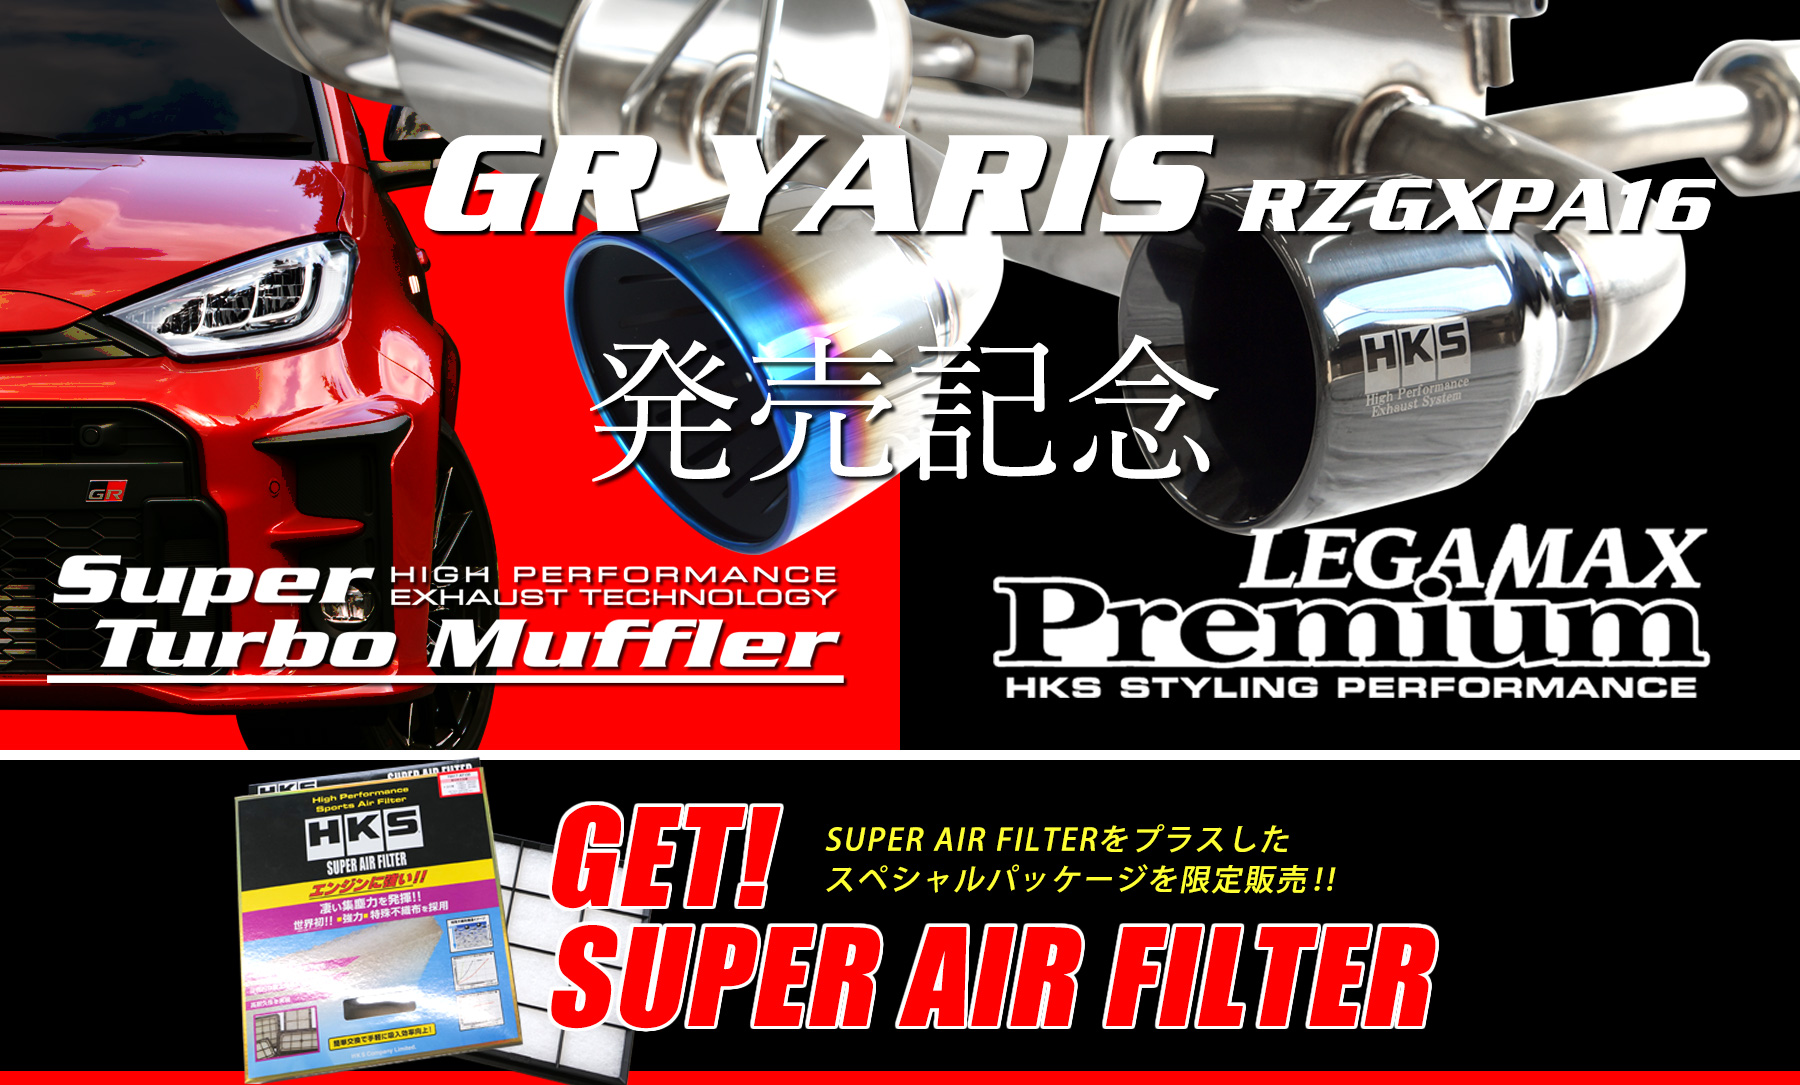 Super turbo Muffler / LEGAMAX Premium「 GR YARIS RZ（GXPA16） 」発売を記念